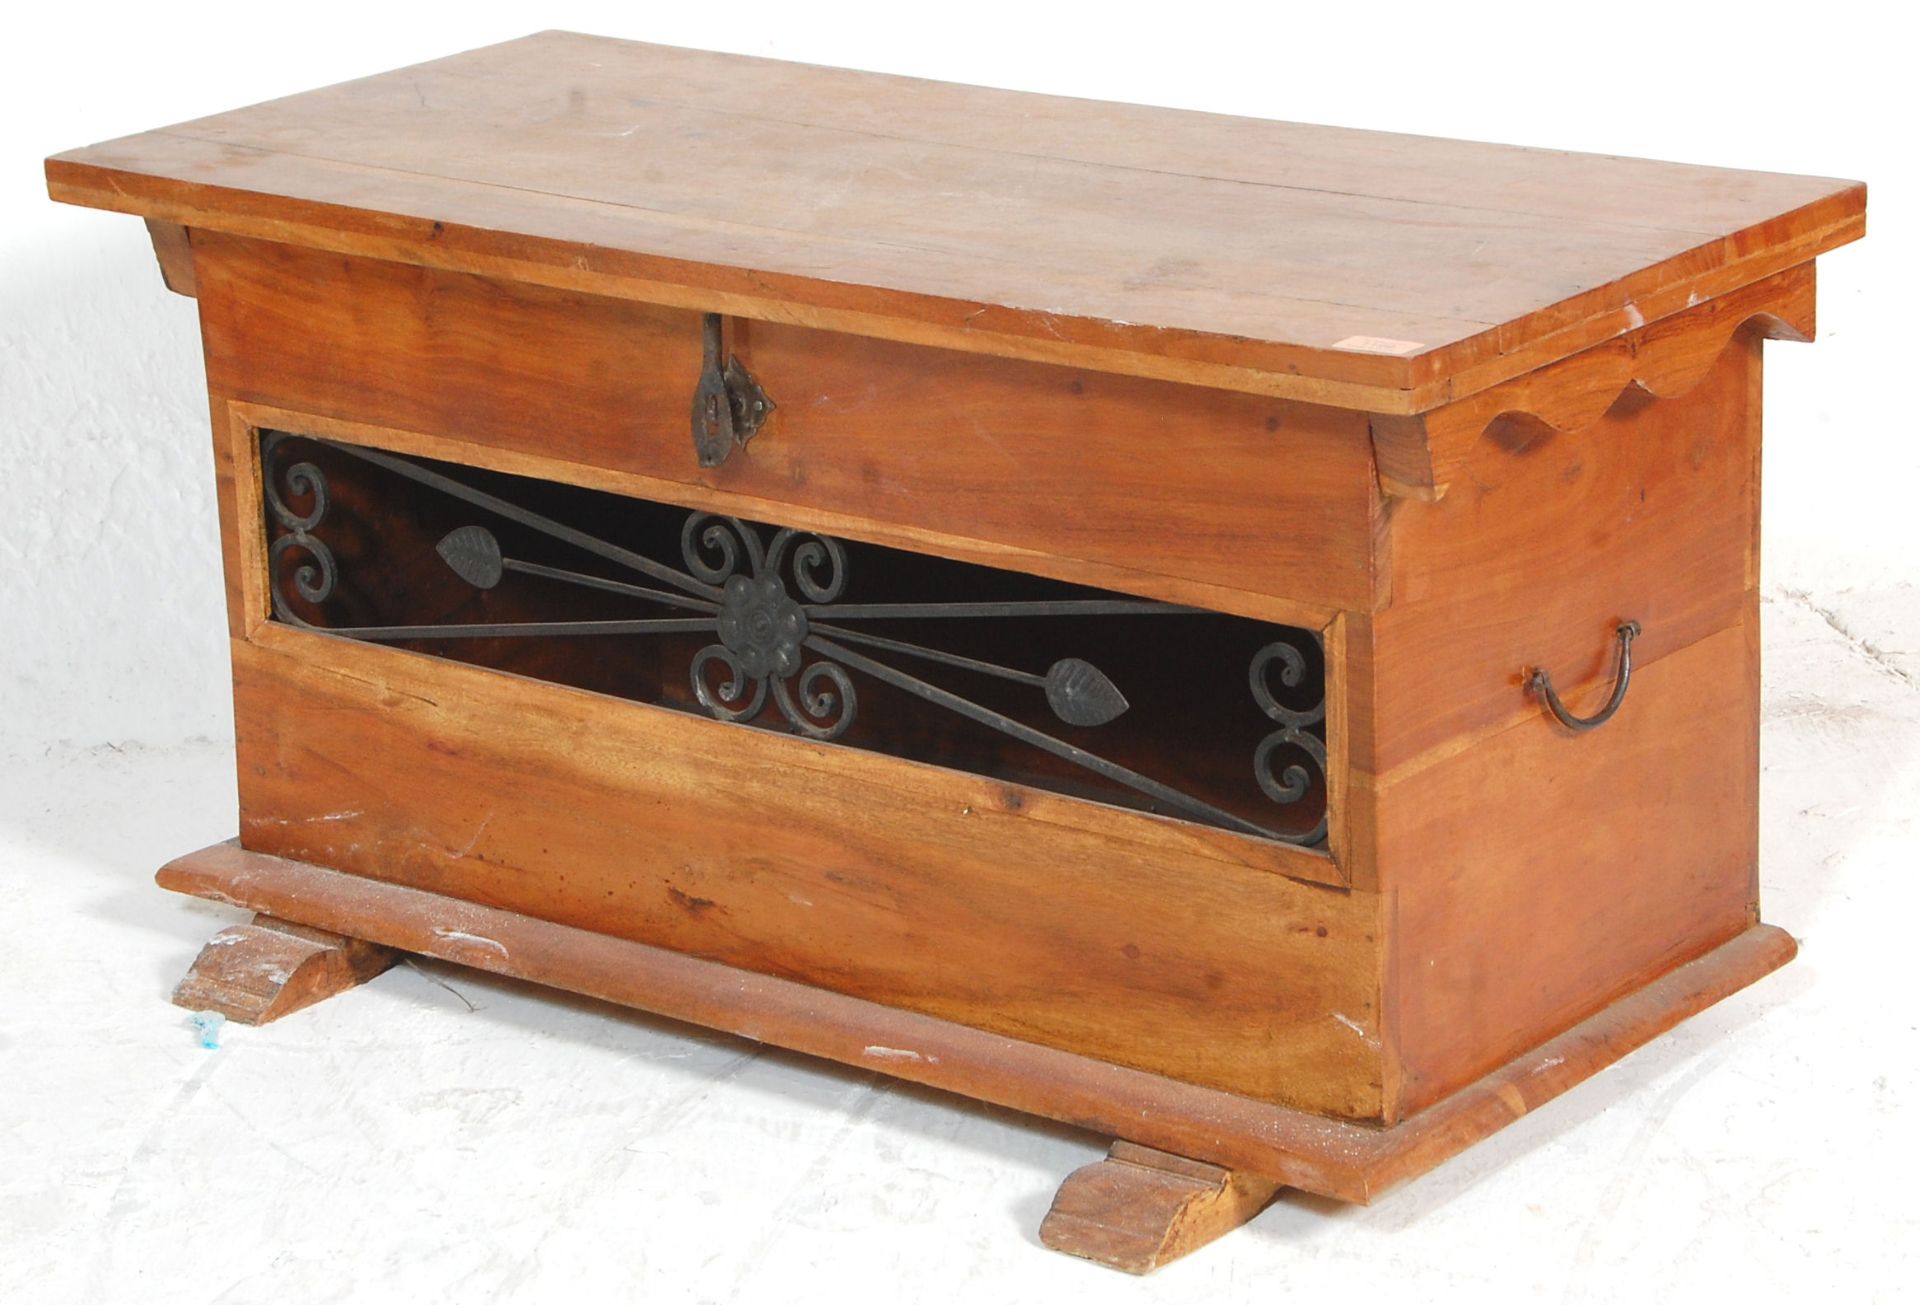 An unusual 20th century decorative hardwood Spanish Armada inspired casssone coffee table / - Image 6 of 7